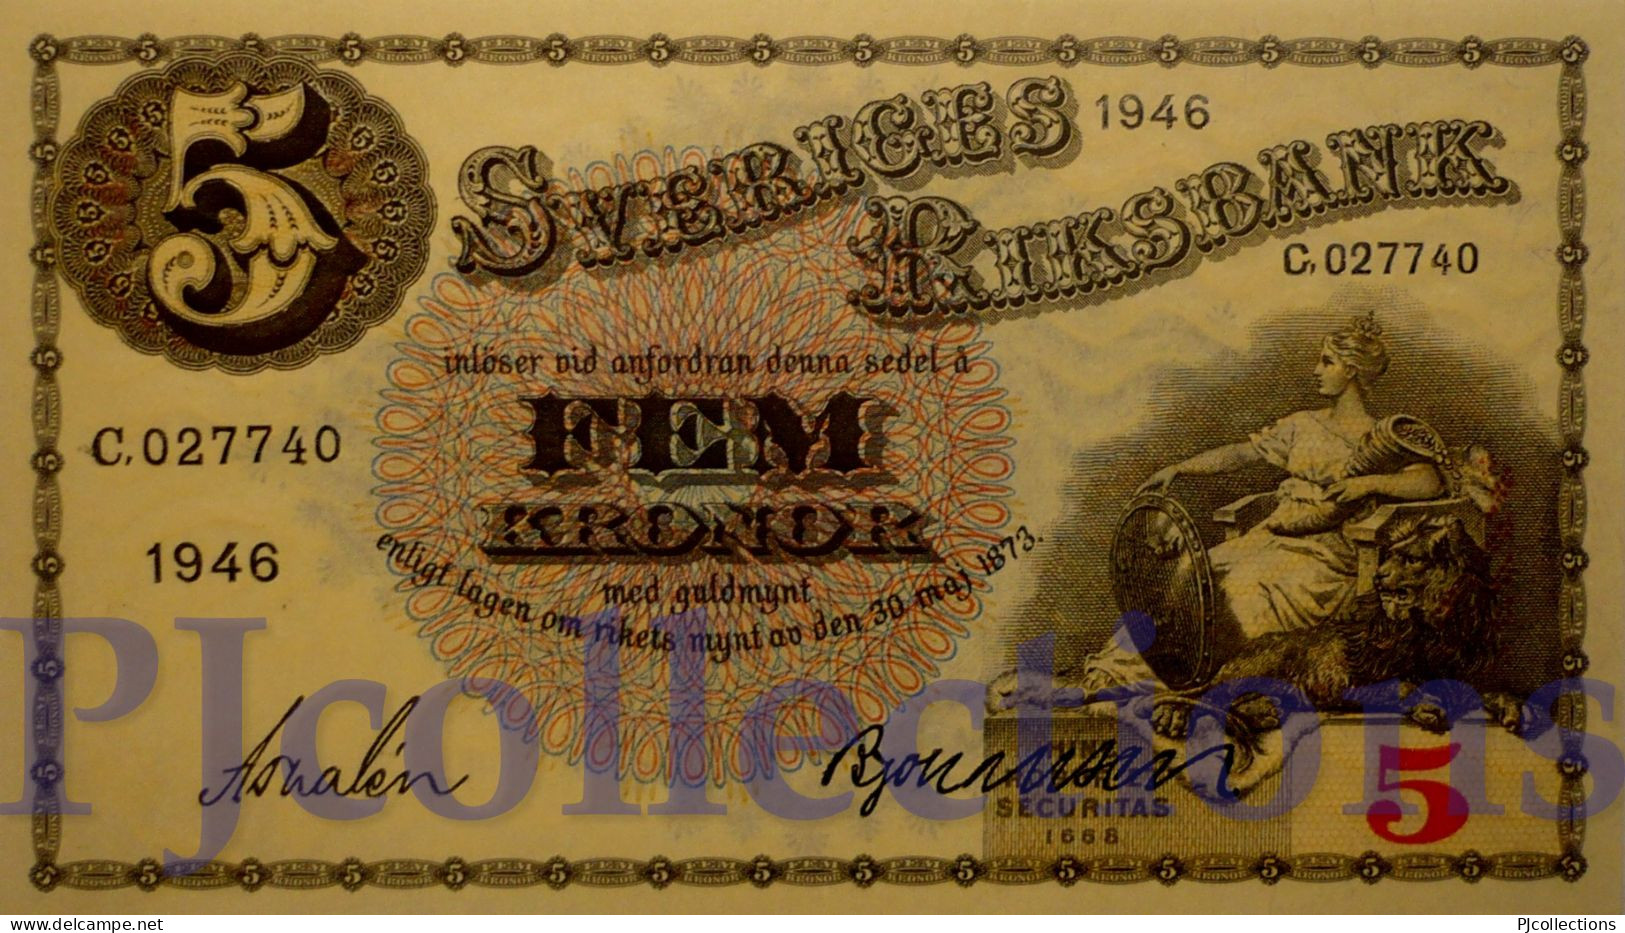 SWEDEN 5 KRONOR 1946 PICK 33ac UNC - Sweden